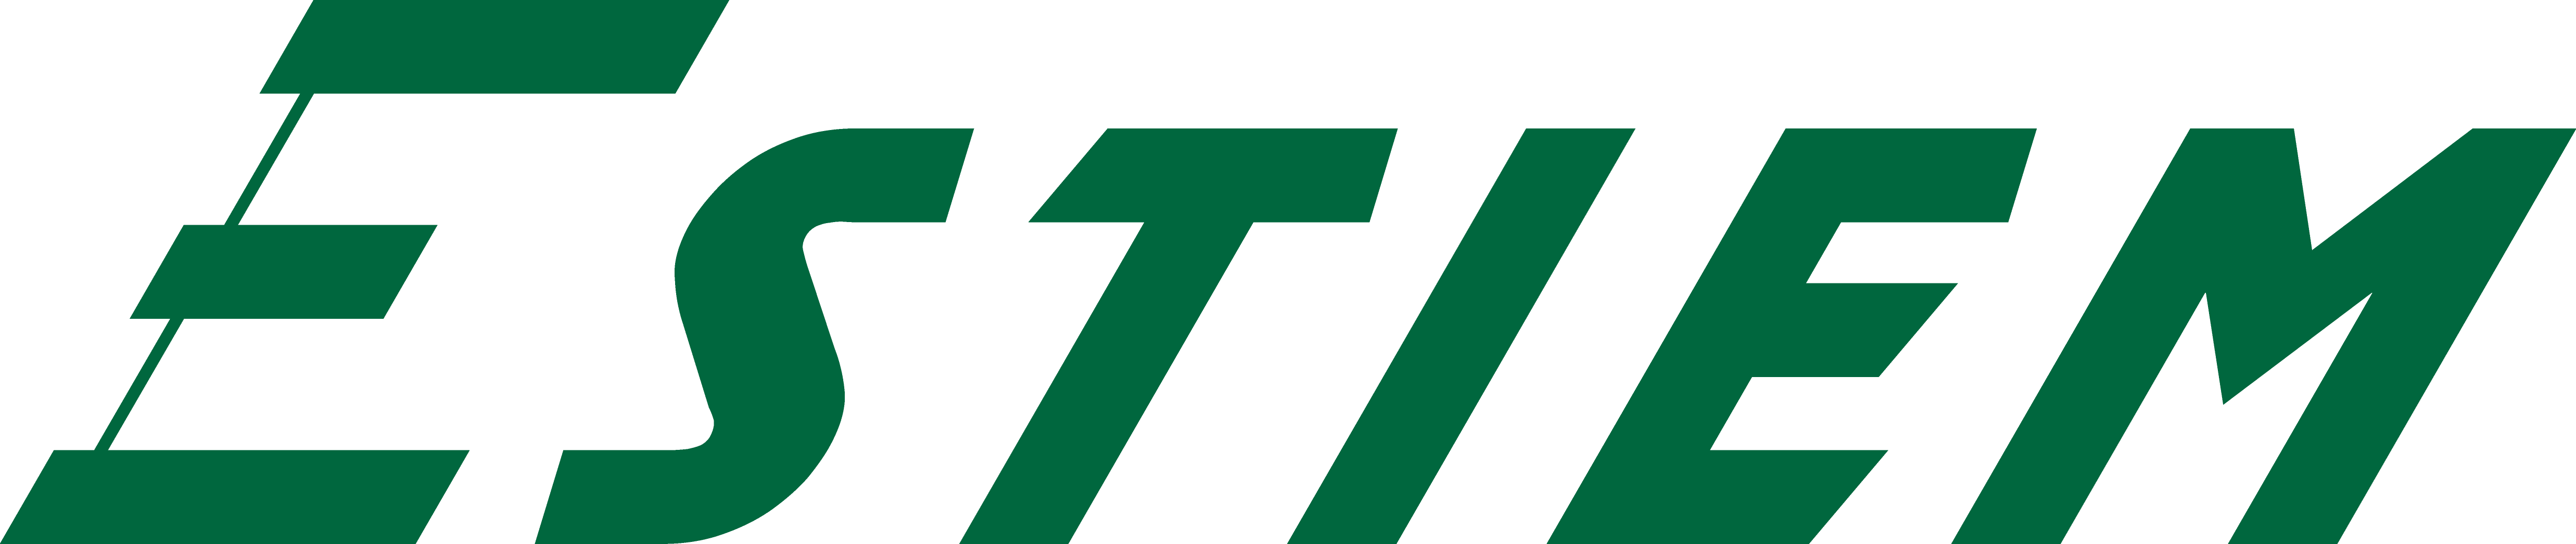 ESTIEM logo